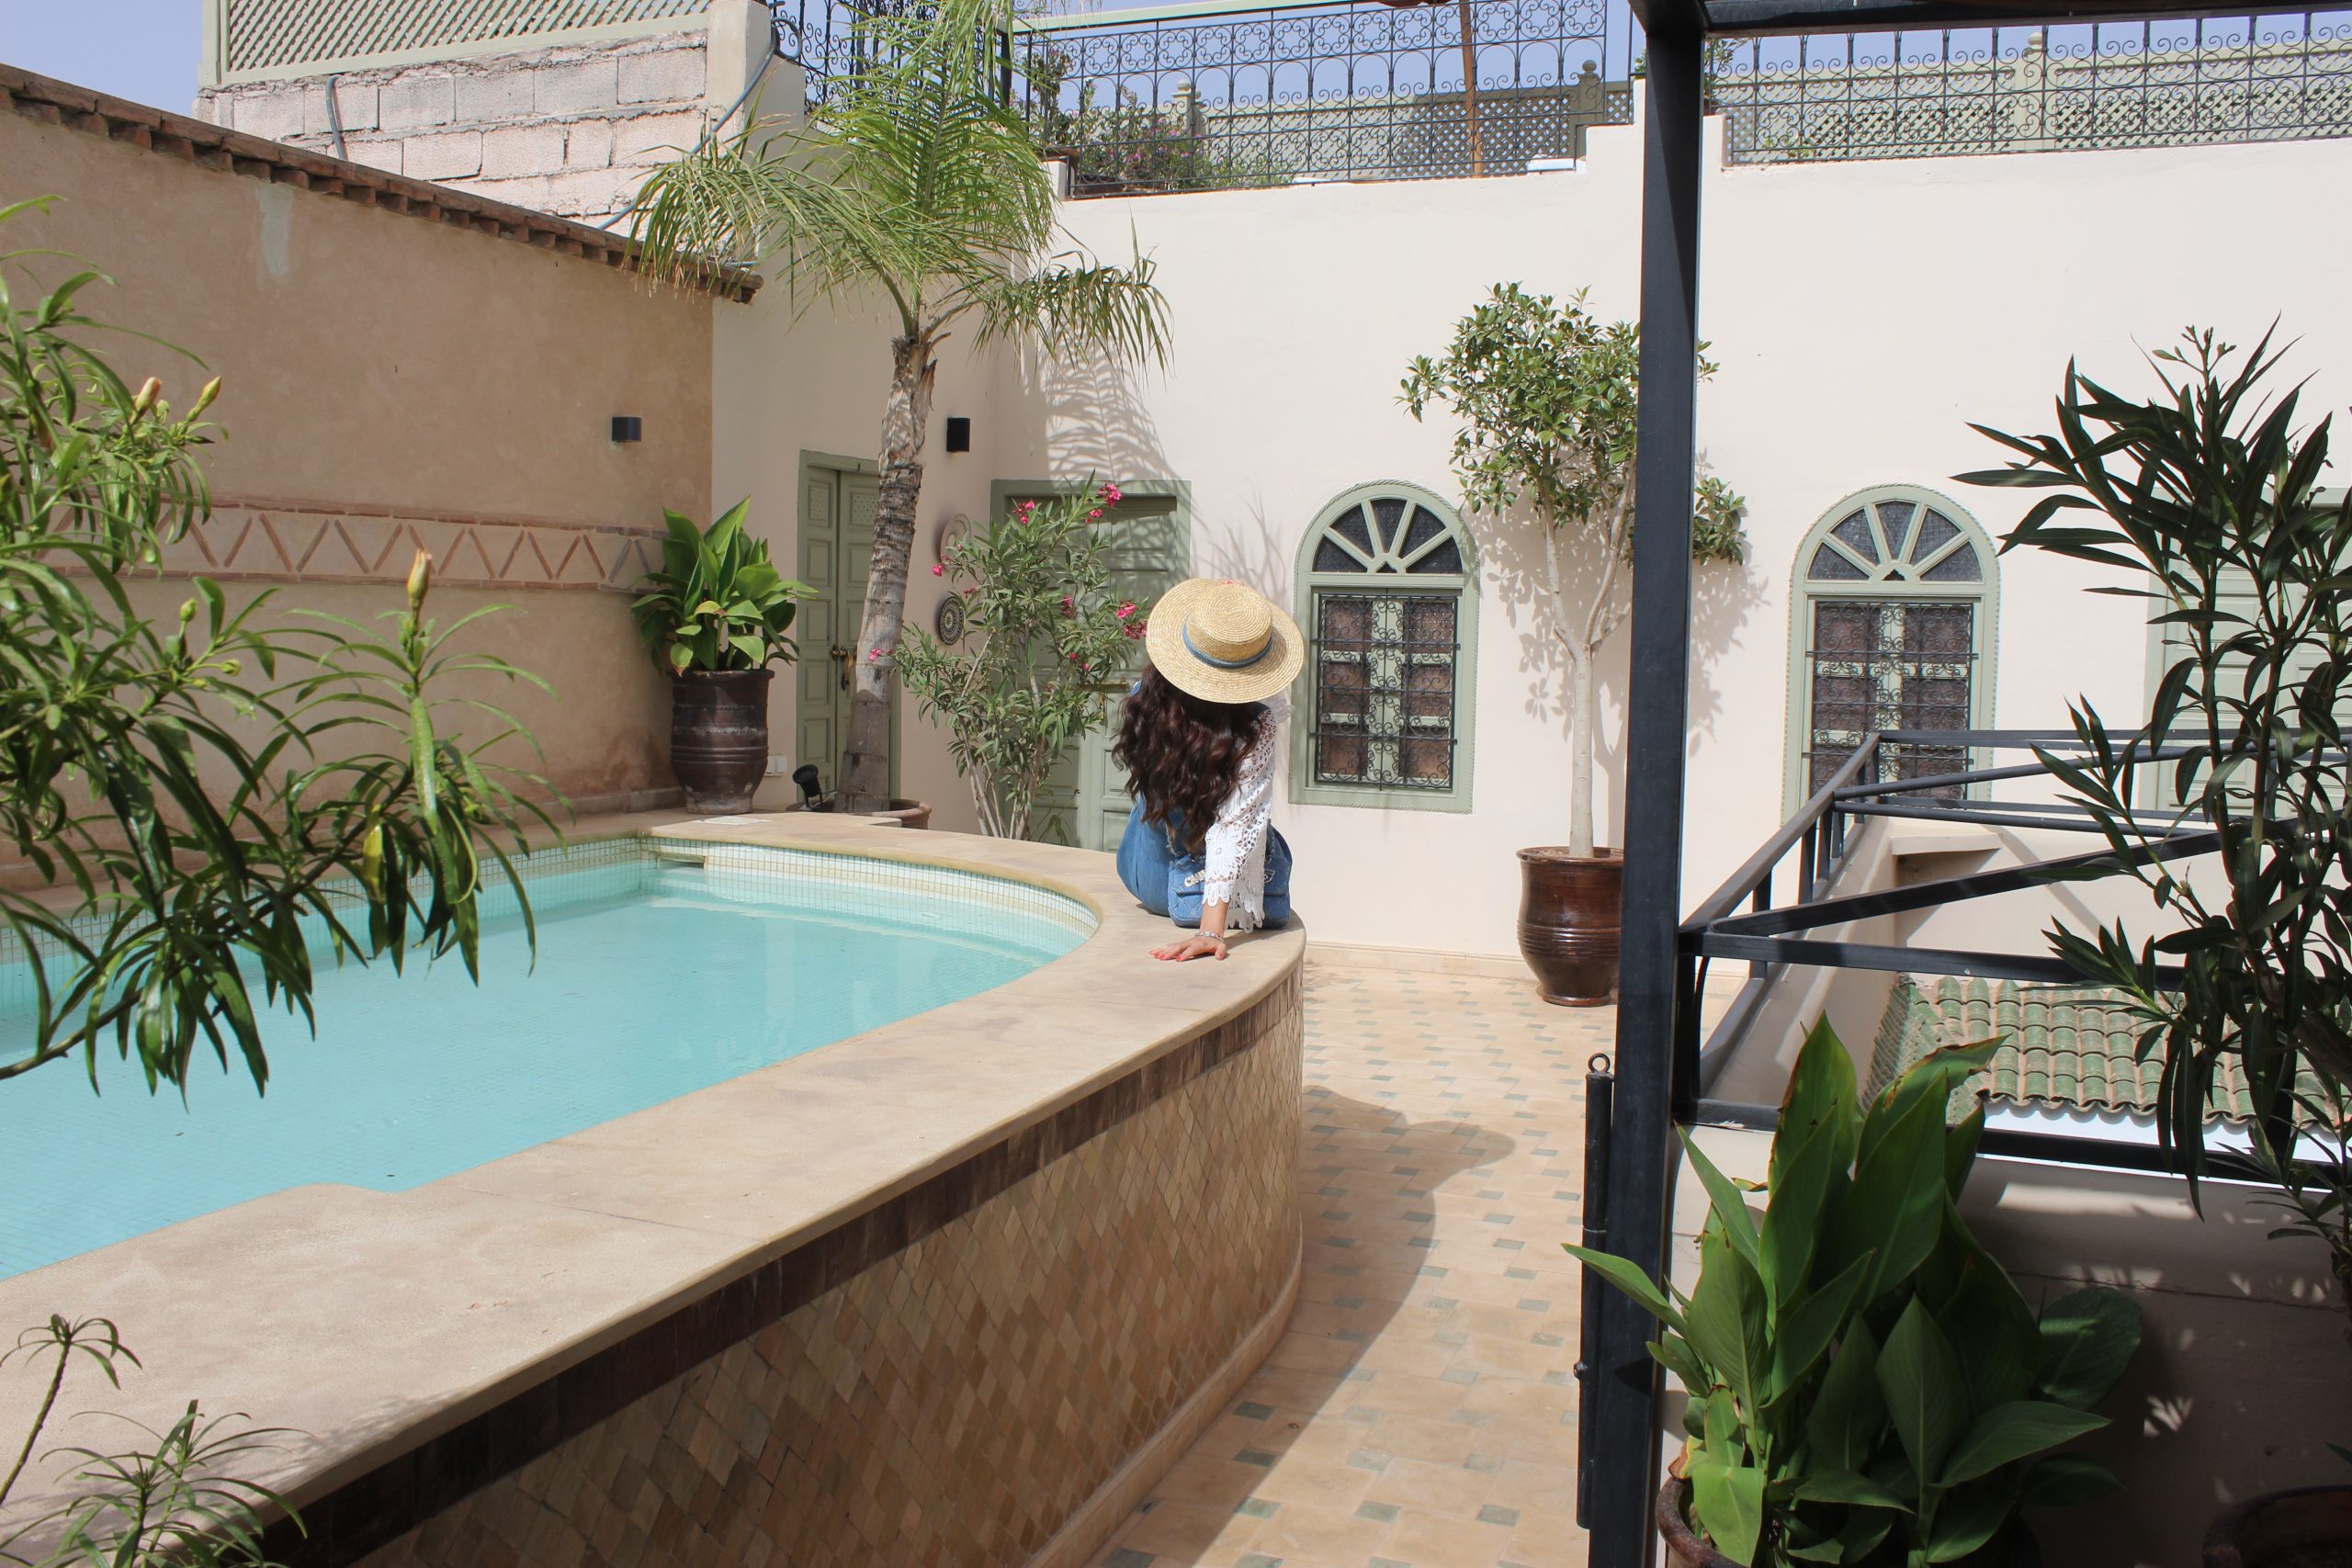 FRANCESCA CONOCI dress CHANEL accessories Marrakech Travel Trip Paola Lauretano